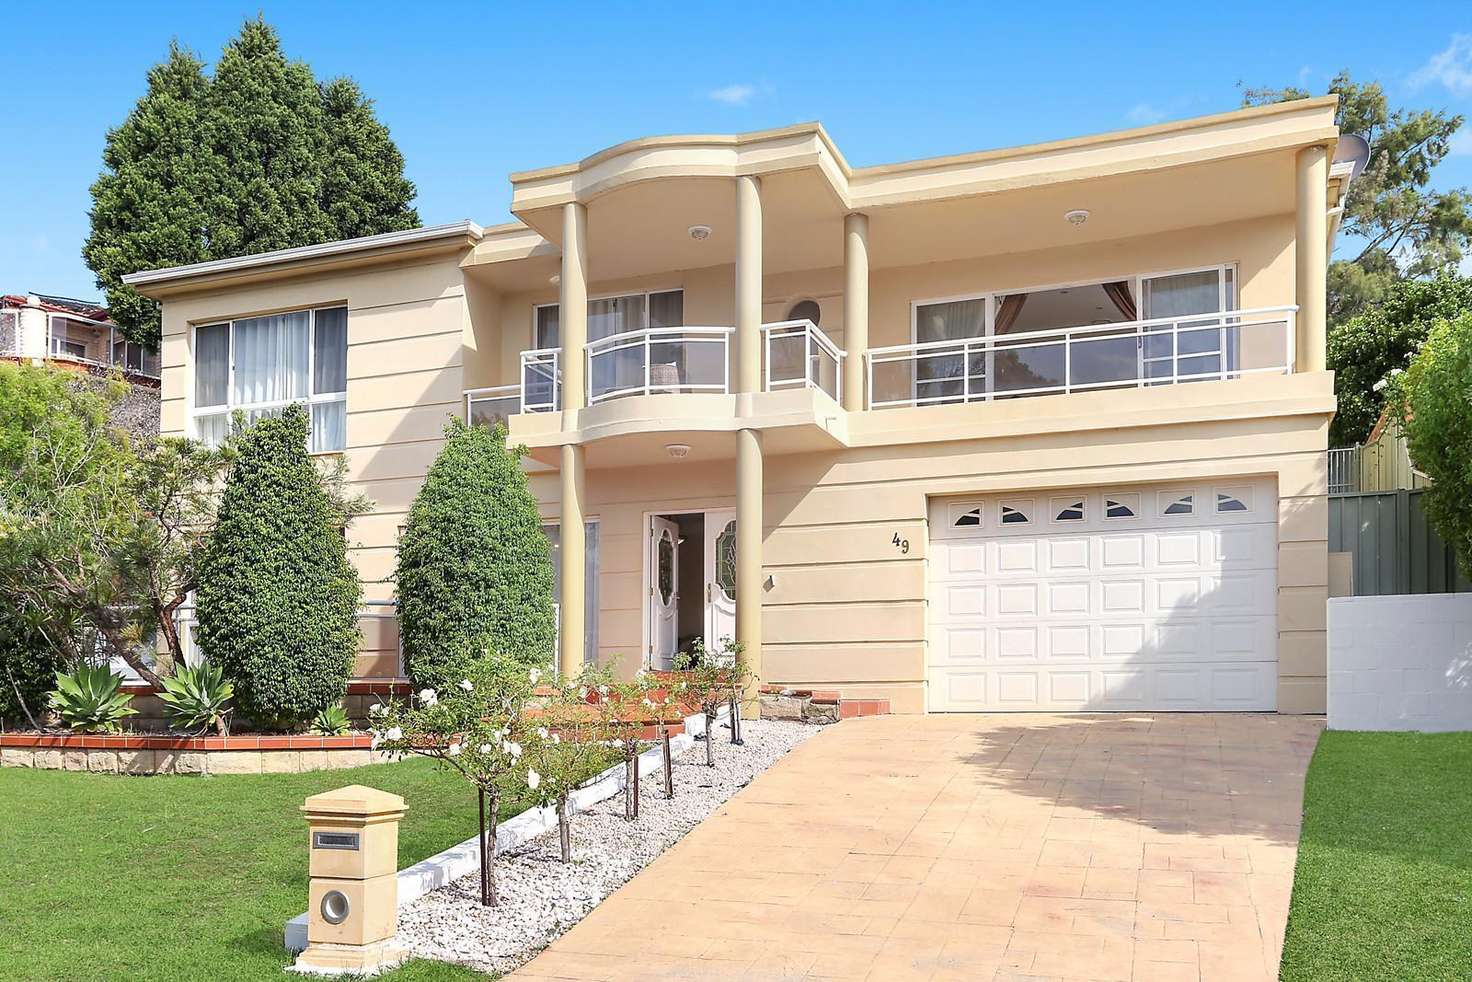 Main view of Homely house listing, 49 Llanberis Drive, Menai NSW 2234